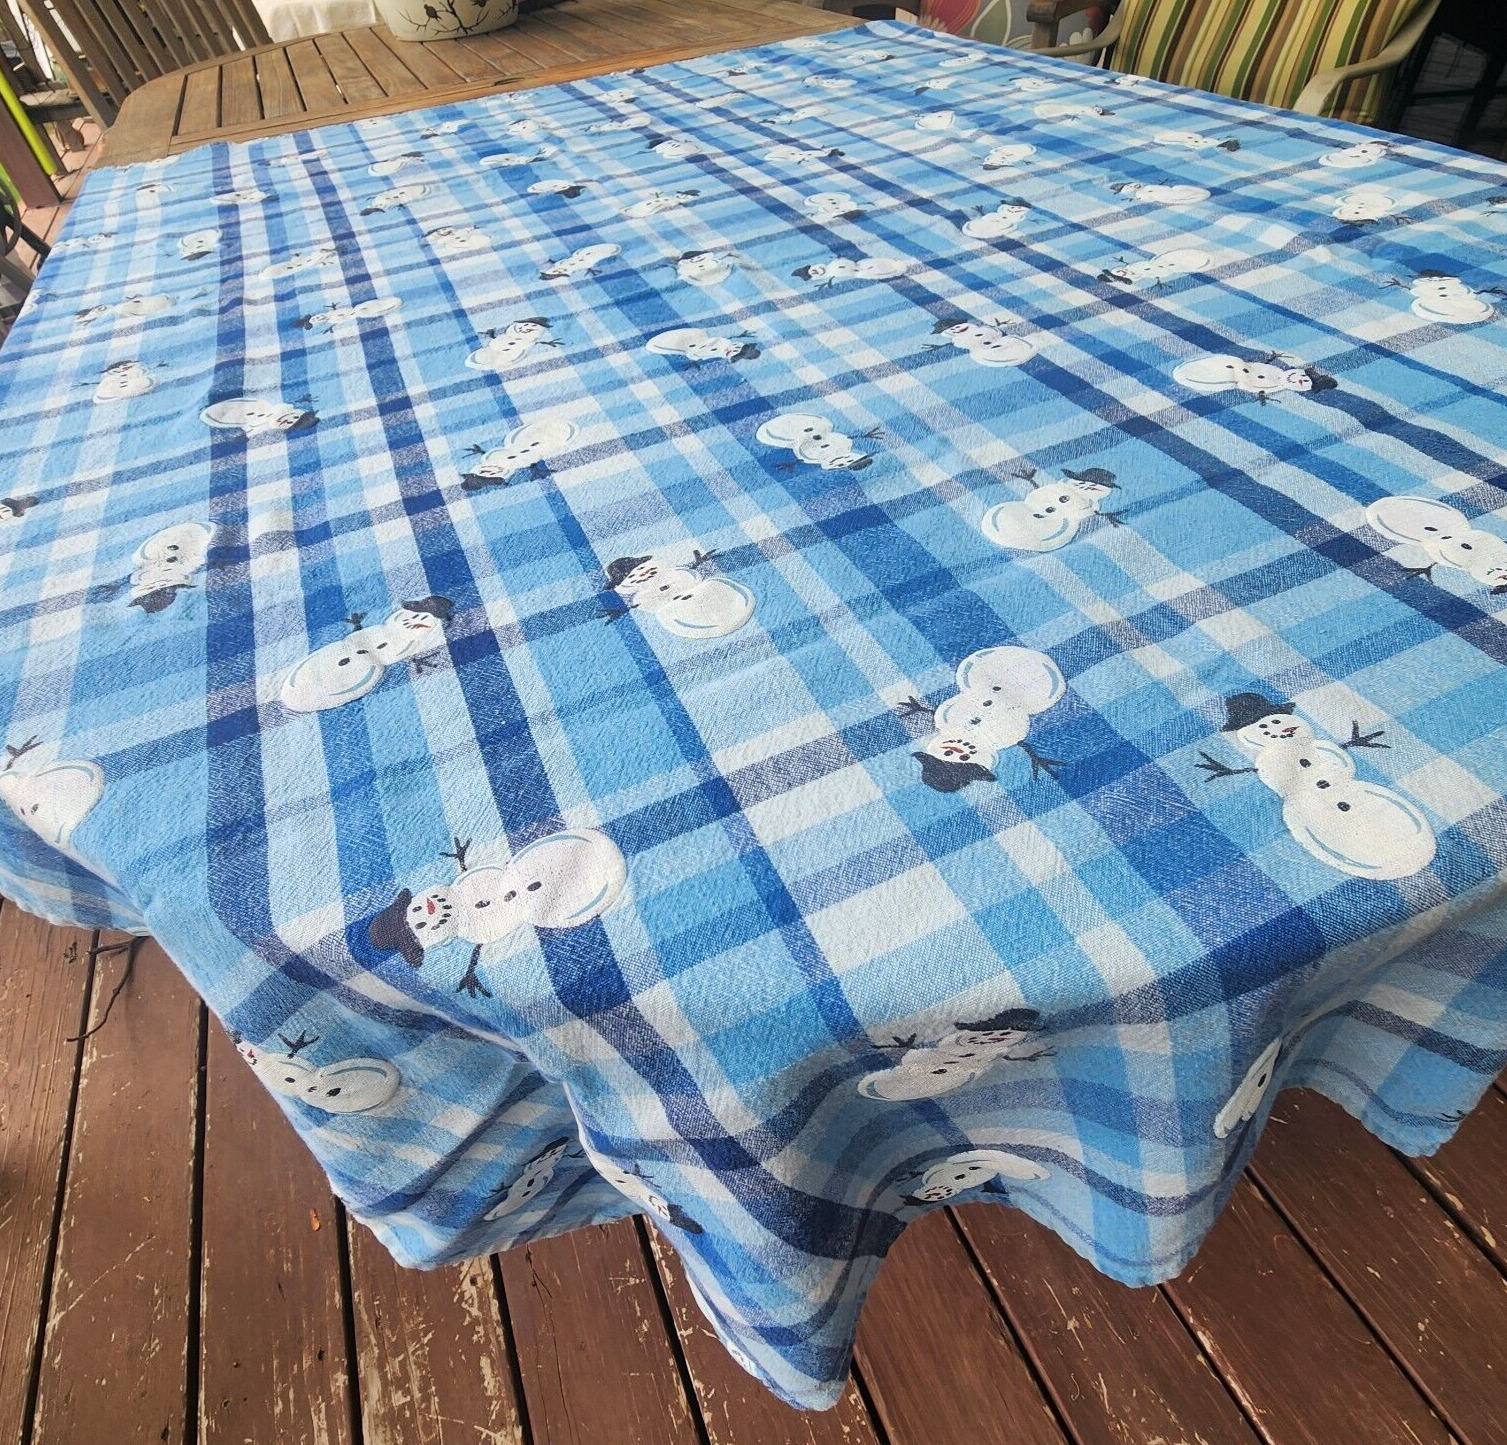 Avon Home Fashions Winter Tablecloth Blue Plaid All Over Snowman Cotton 61x48